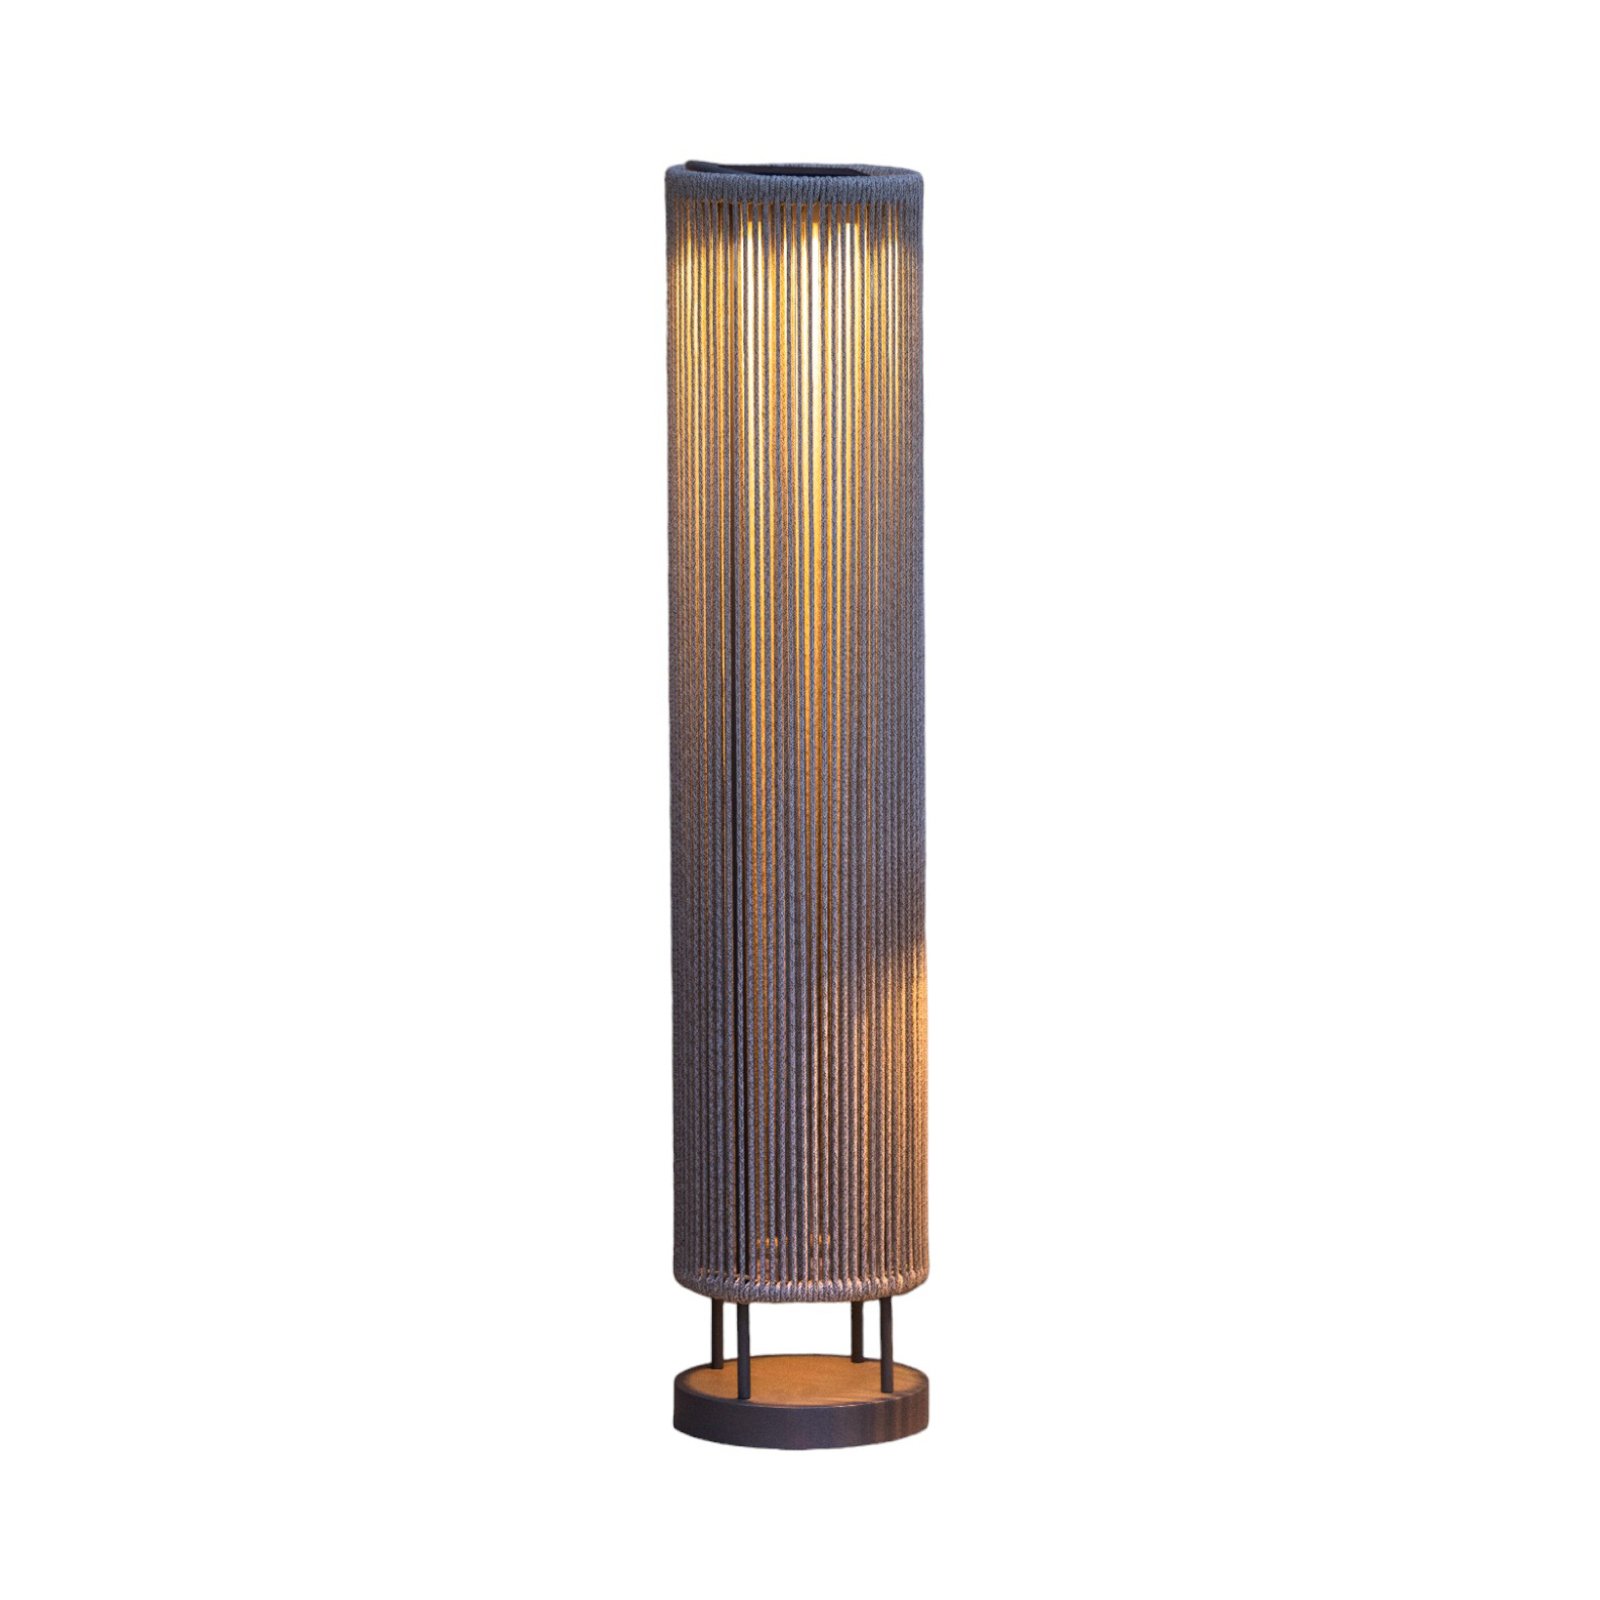 LED floor lamp Rop&Strip height 120cm, 3,000 K, 500 lm